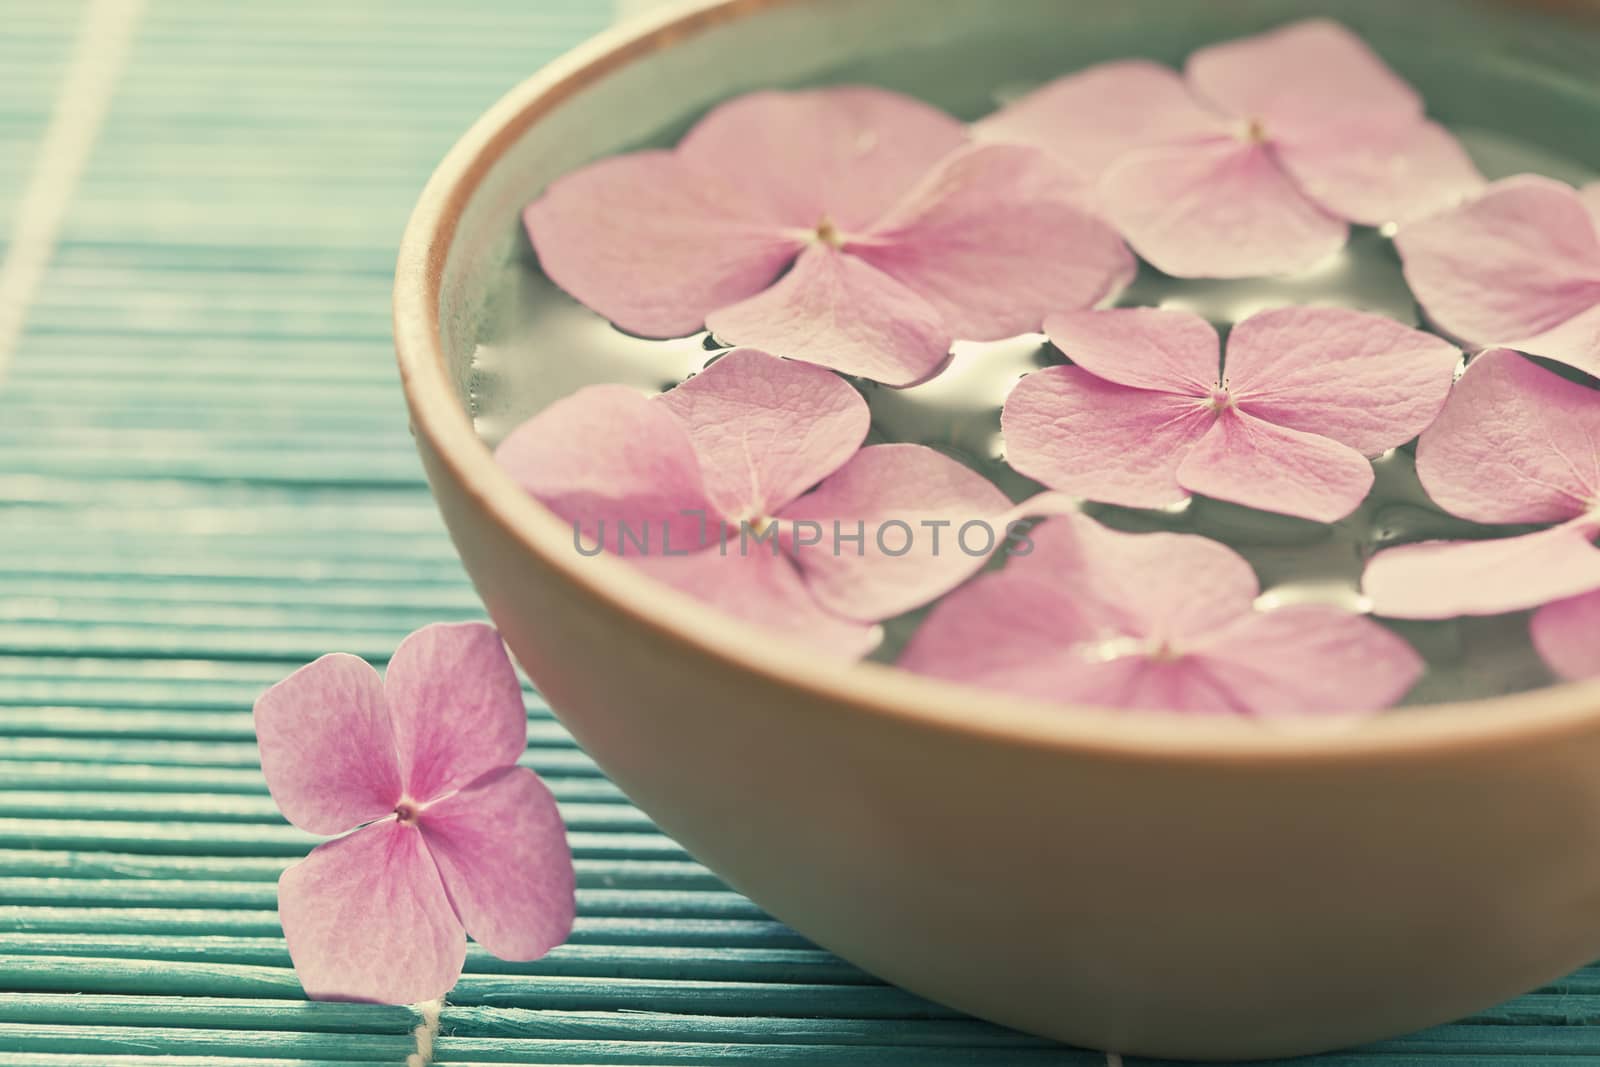 Flowers in bowl of water by mariakomar